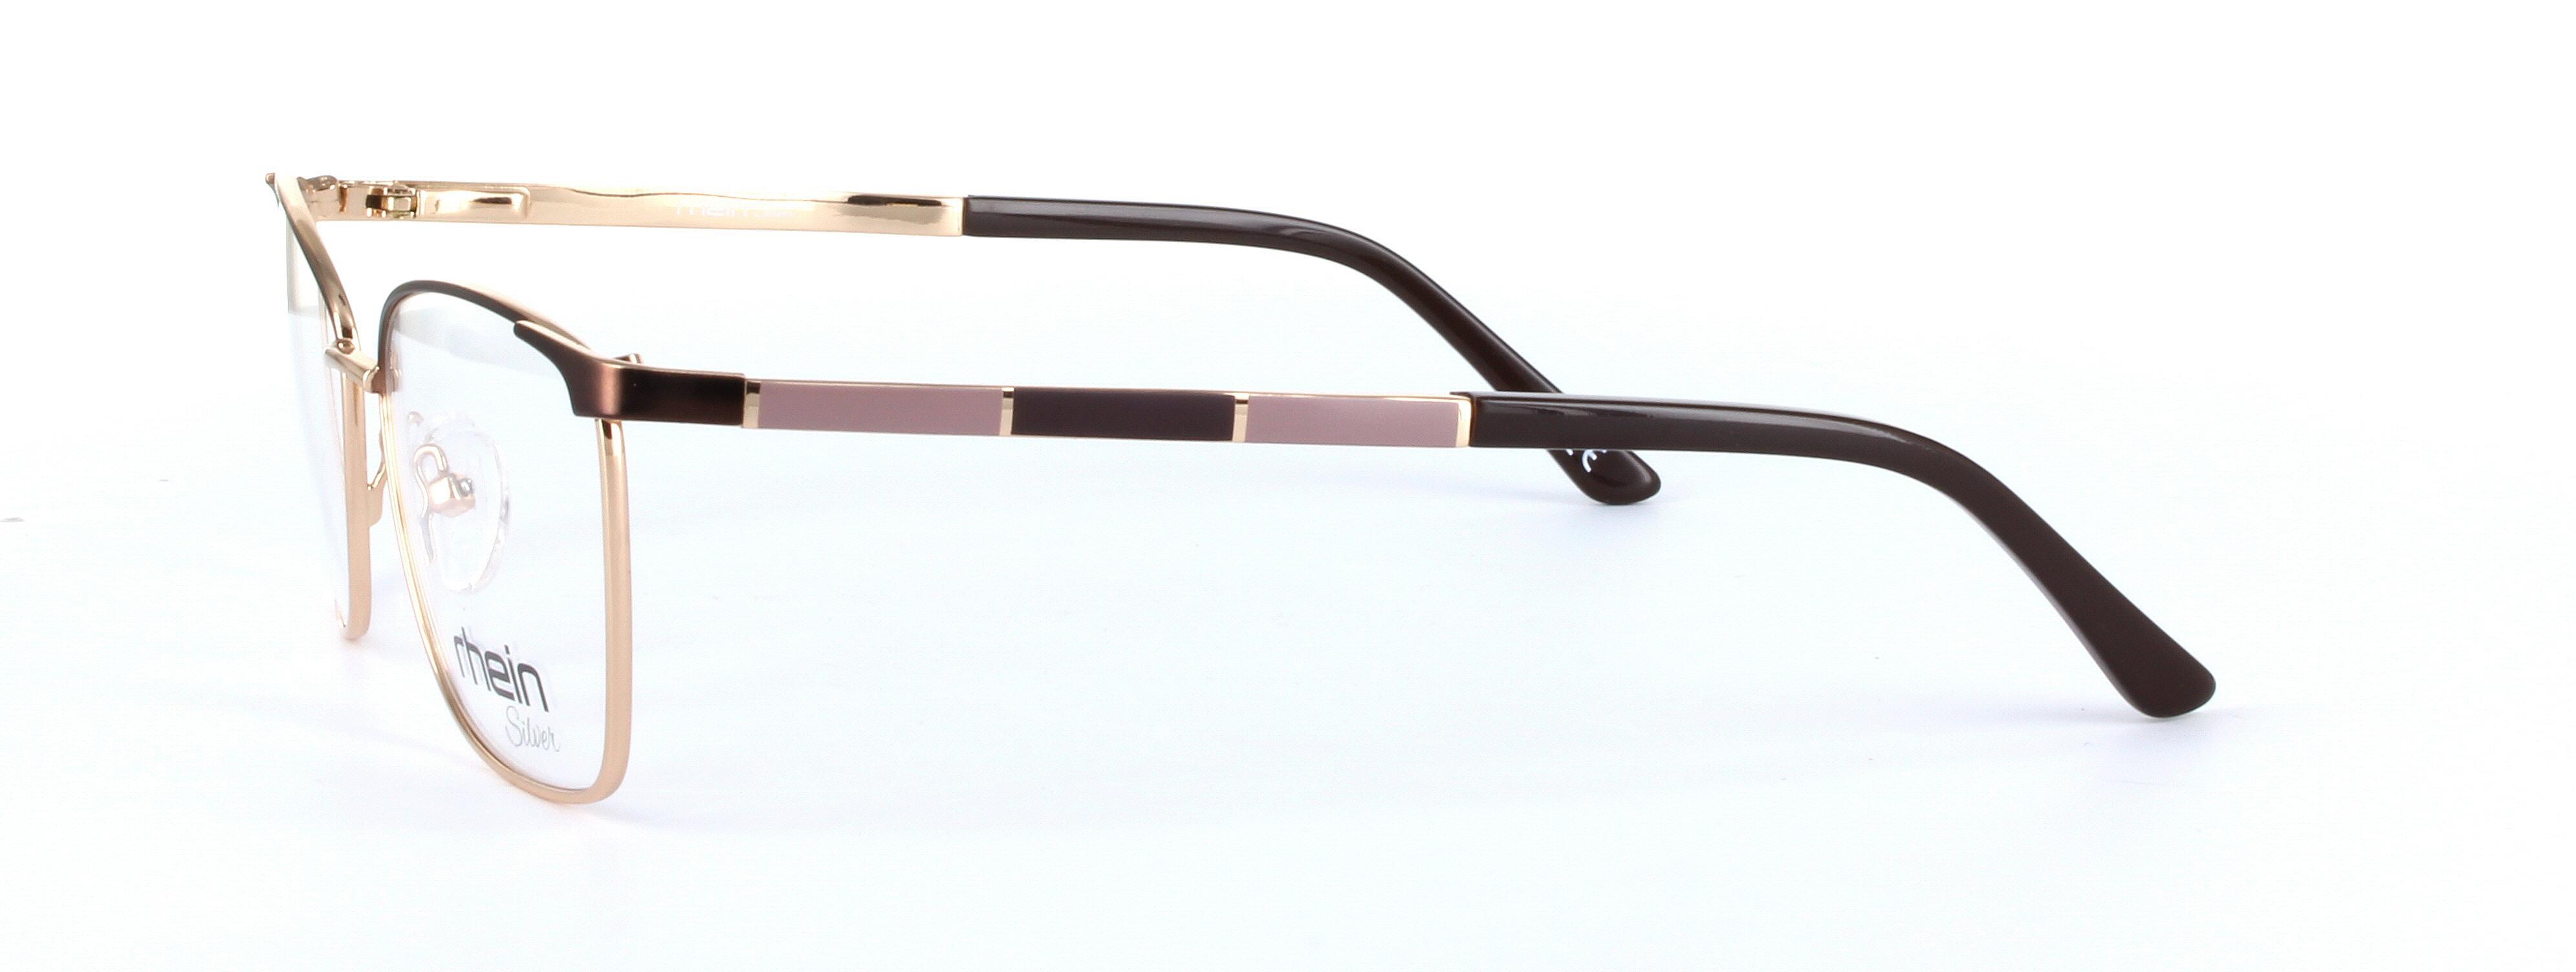 Allegra Brown Full Rim Oval Round Metal Glasses - Image View 2